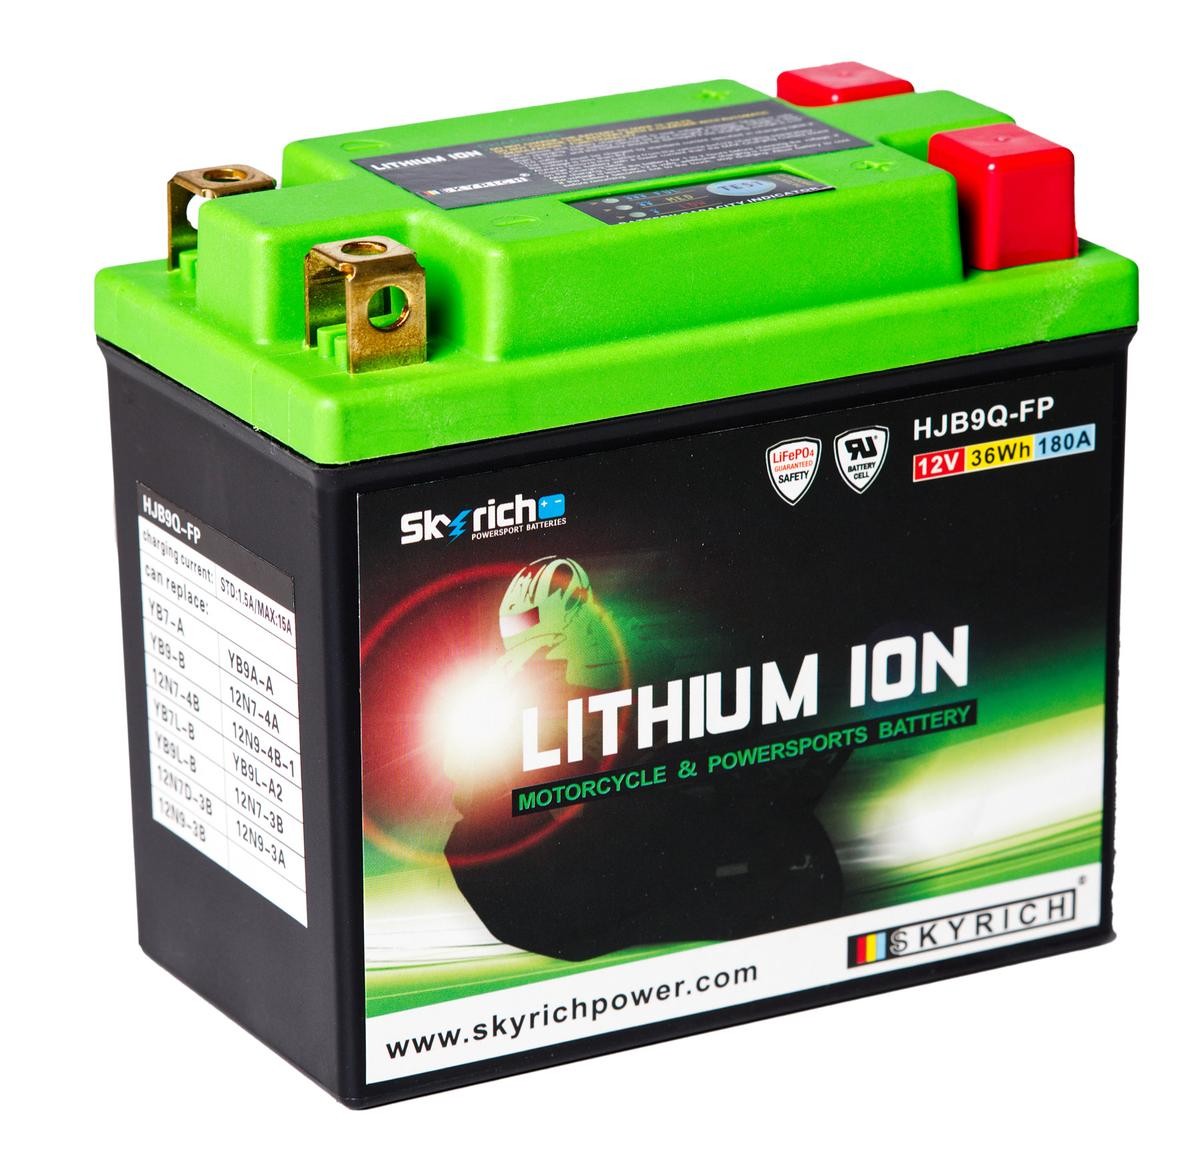 APRILIA WIND Batterie 12V 3Ah 180A N Li-Ionen-Batterie SKYRICH LITHIUM ION HJB9Q-FP